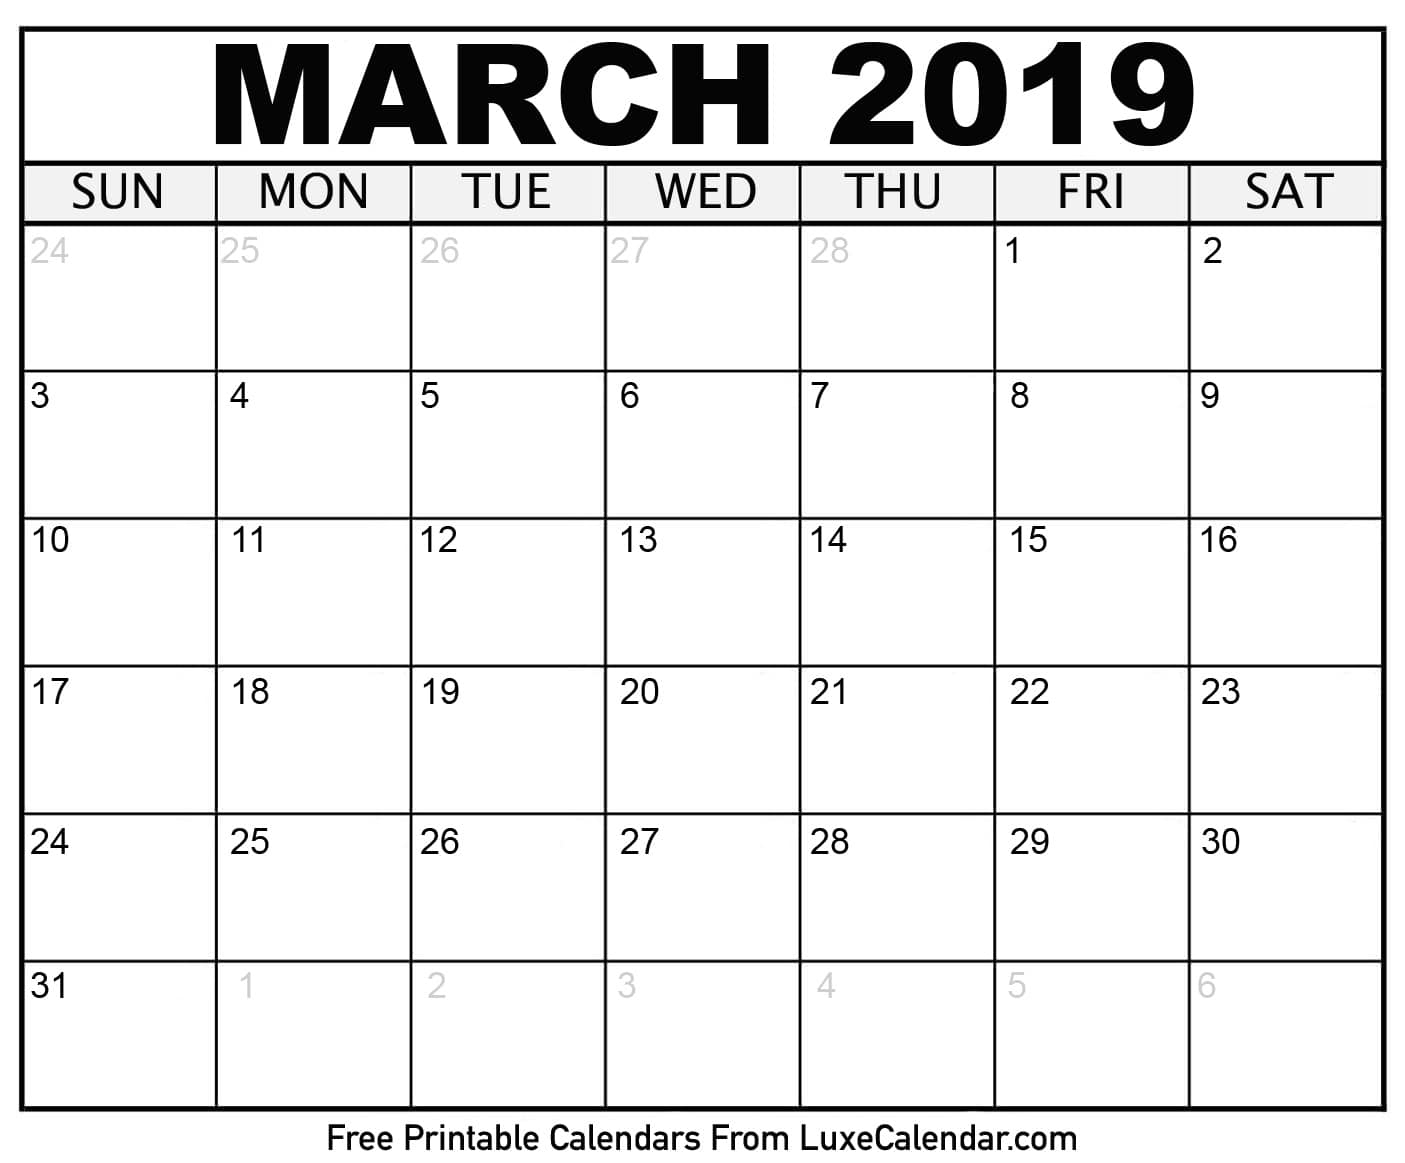 Blank March 2019 Printable Calendar - Luxe Calendar - Free Printable March Activities